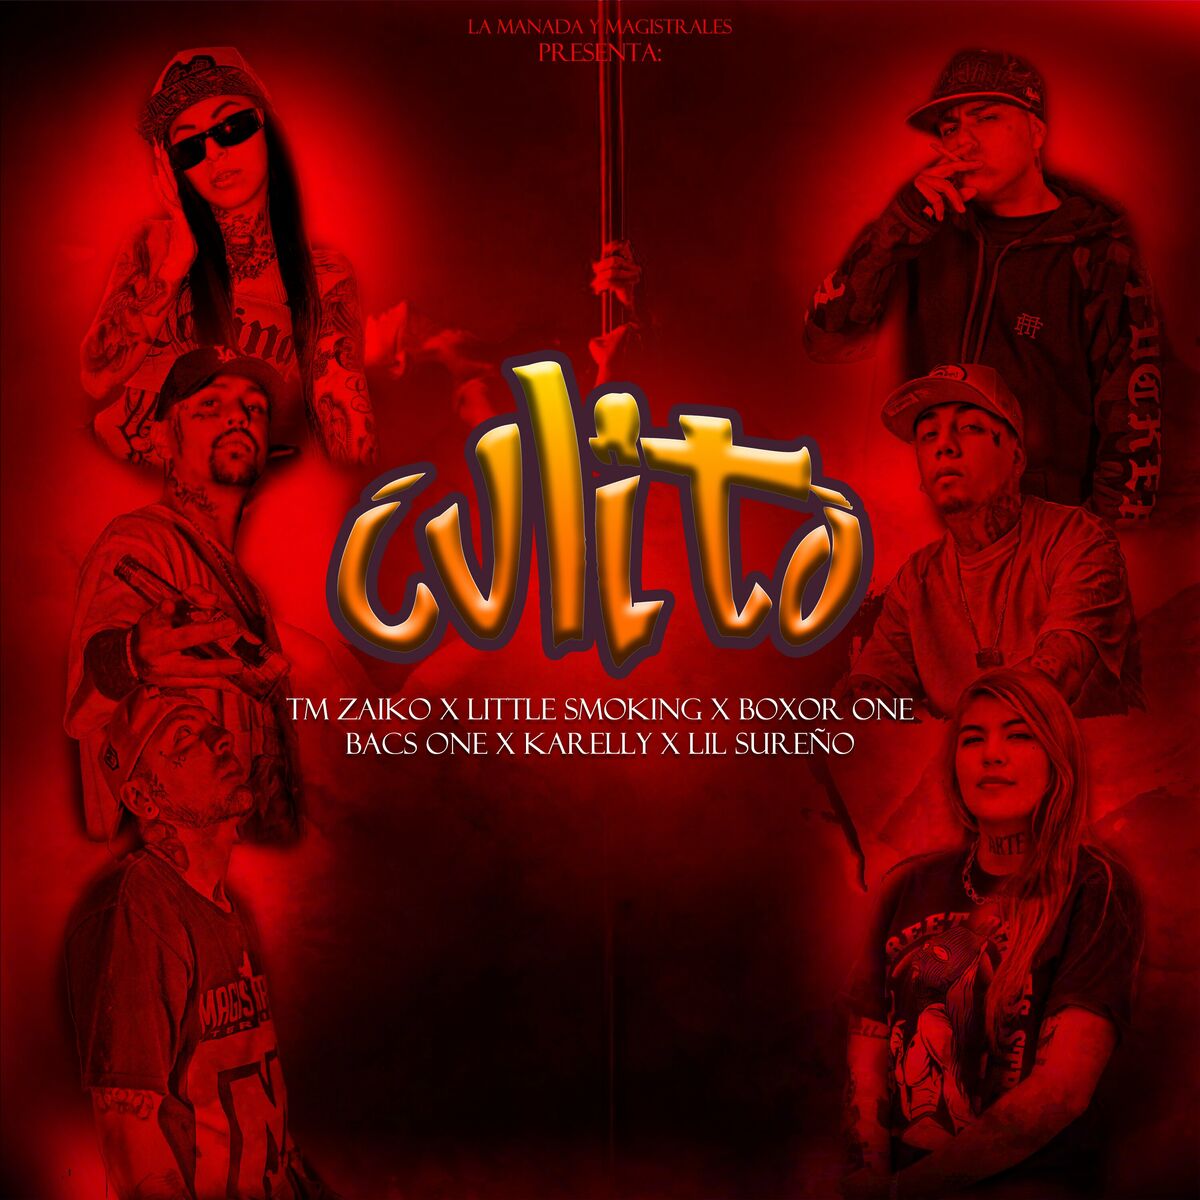 Culito: Tm Zaiko, Little smoking, Boxor One, Bacs One, Karelly, Lil Sureño – Culito